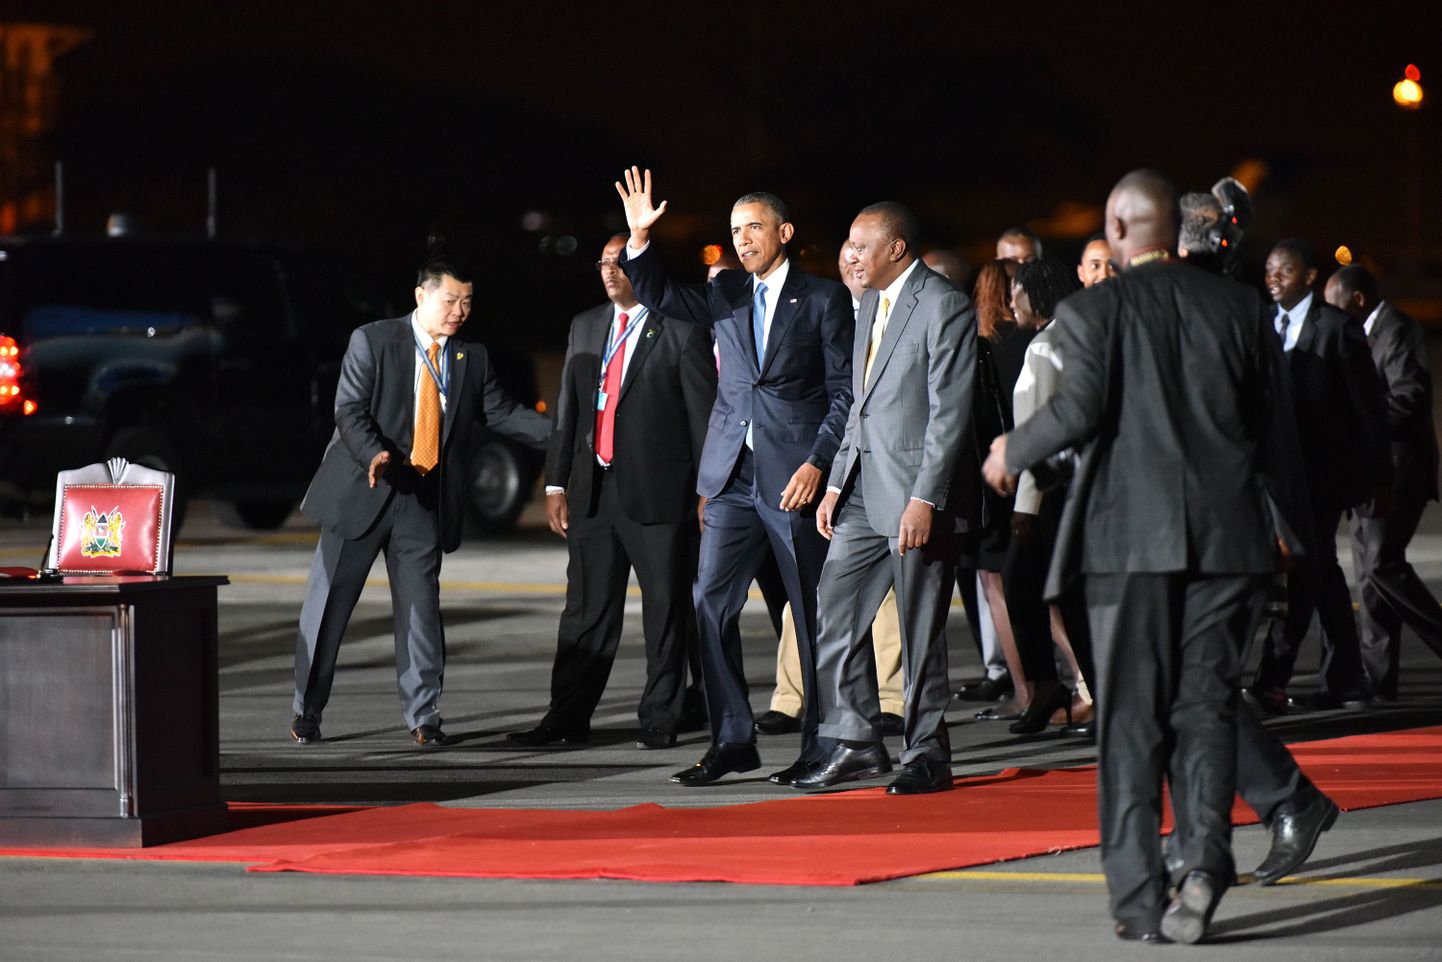 President Obama Keeniasse saabumas.